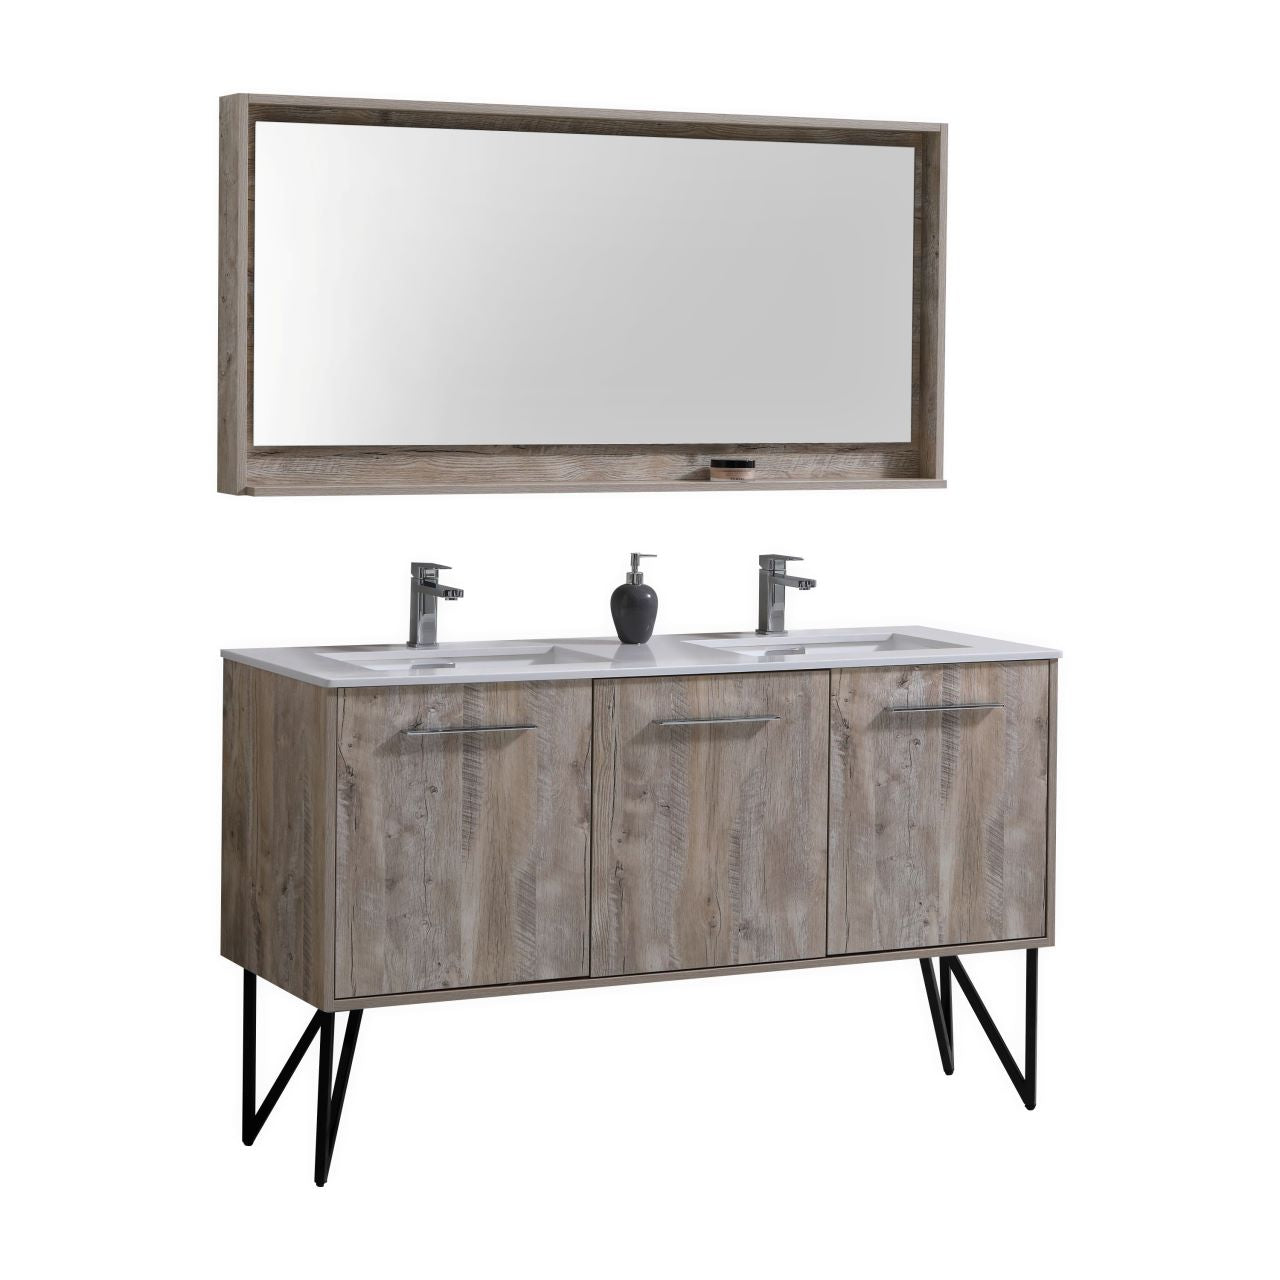 KUBEBATH Bosco KB60DNW 60" Single Bathroom Vanity in Nature Wood with Cream Quartz, Rectangle Sink, Angled View